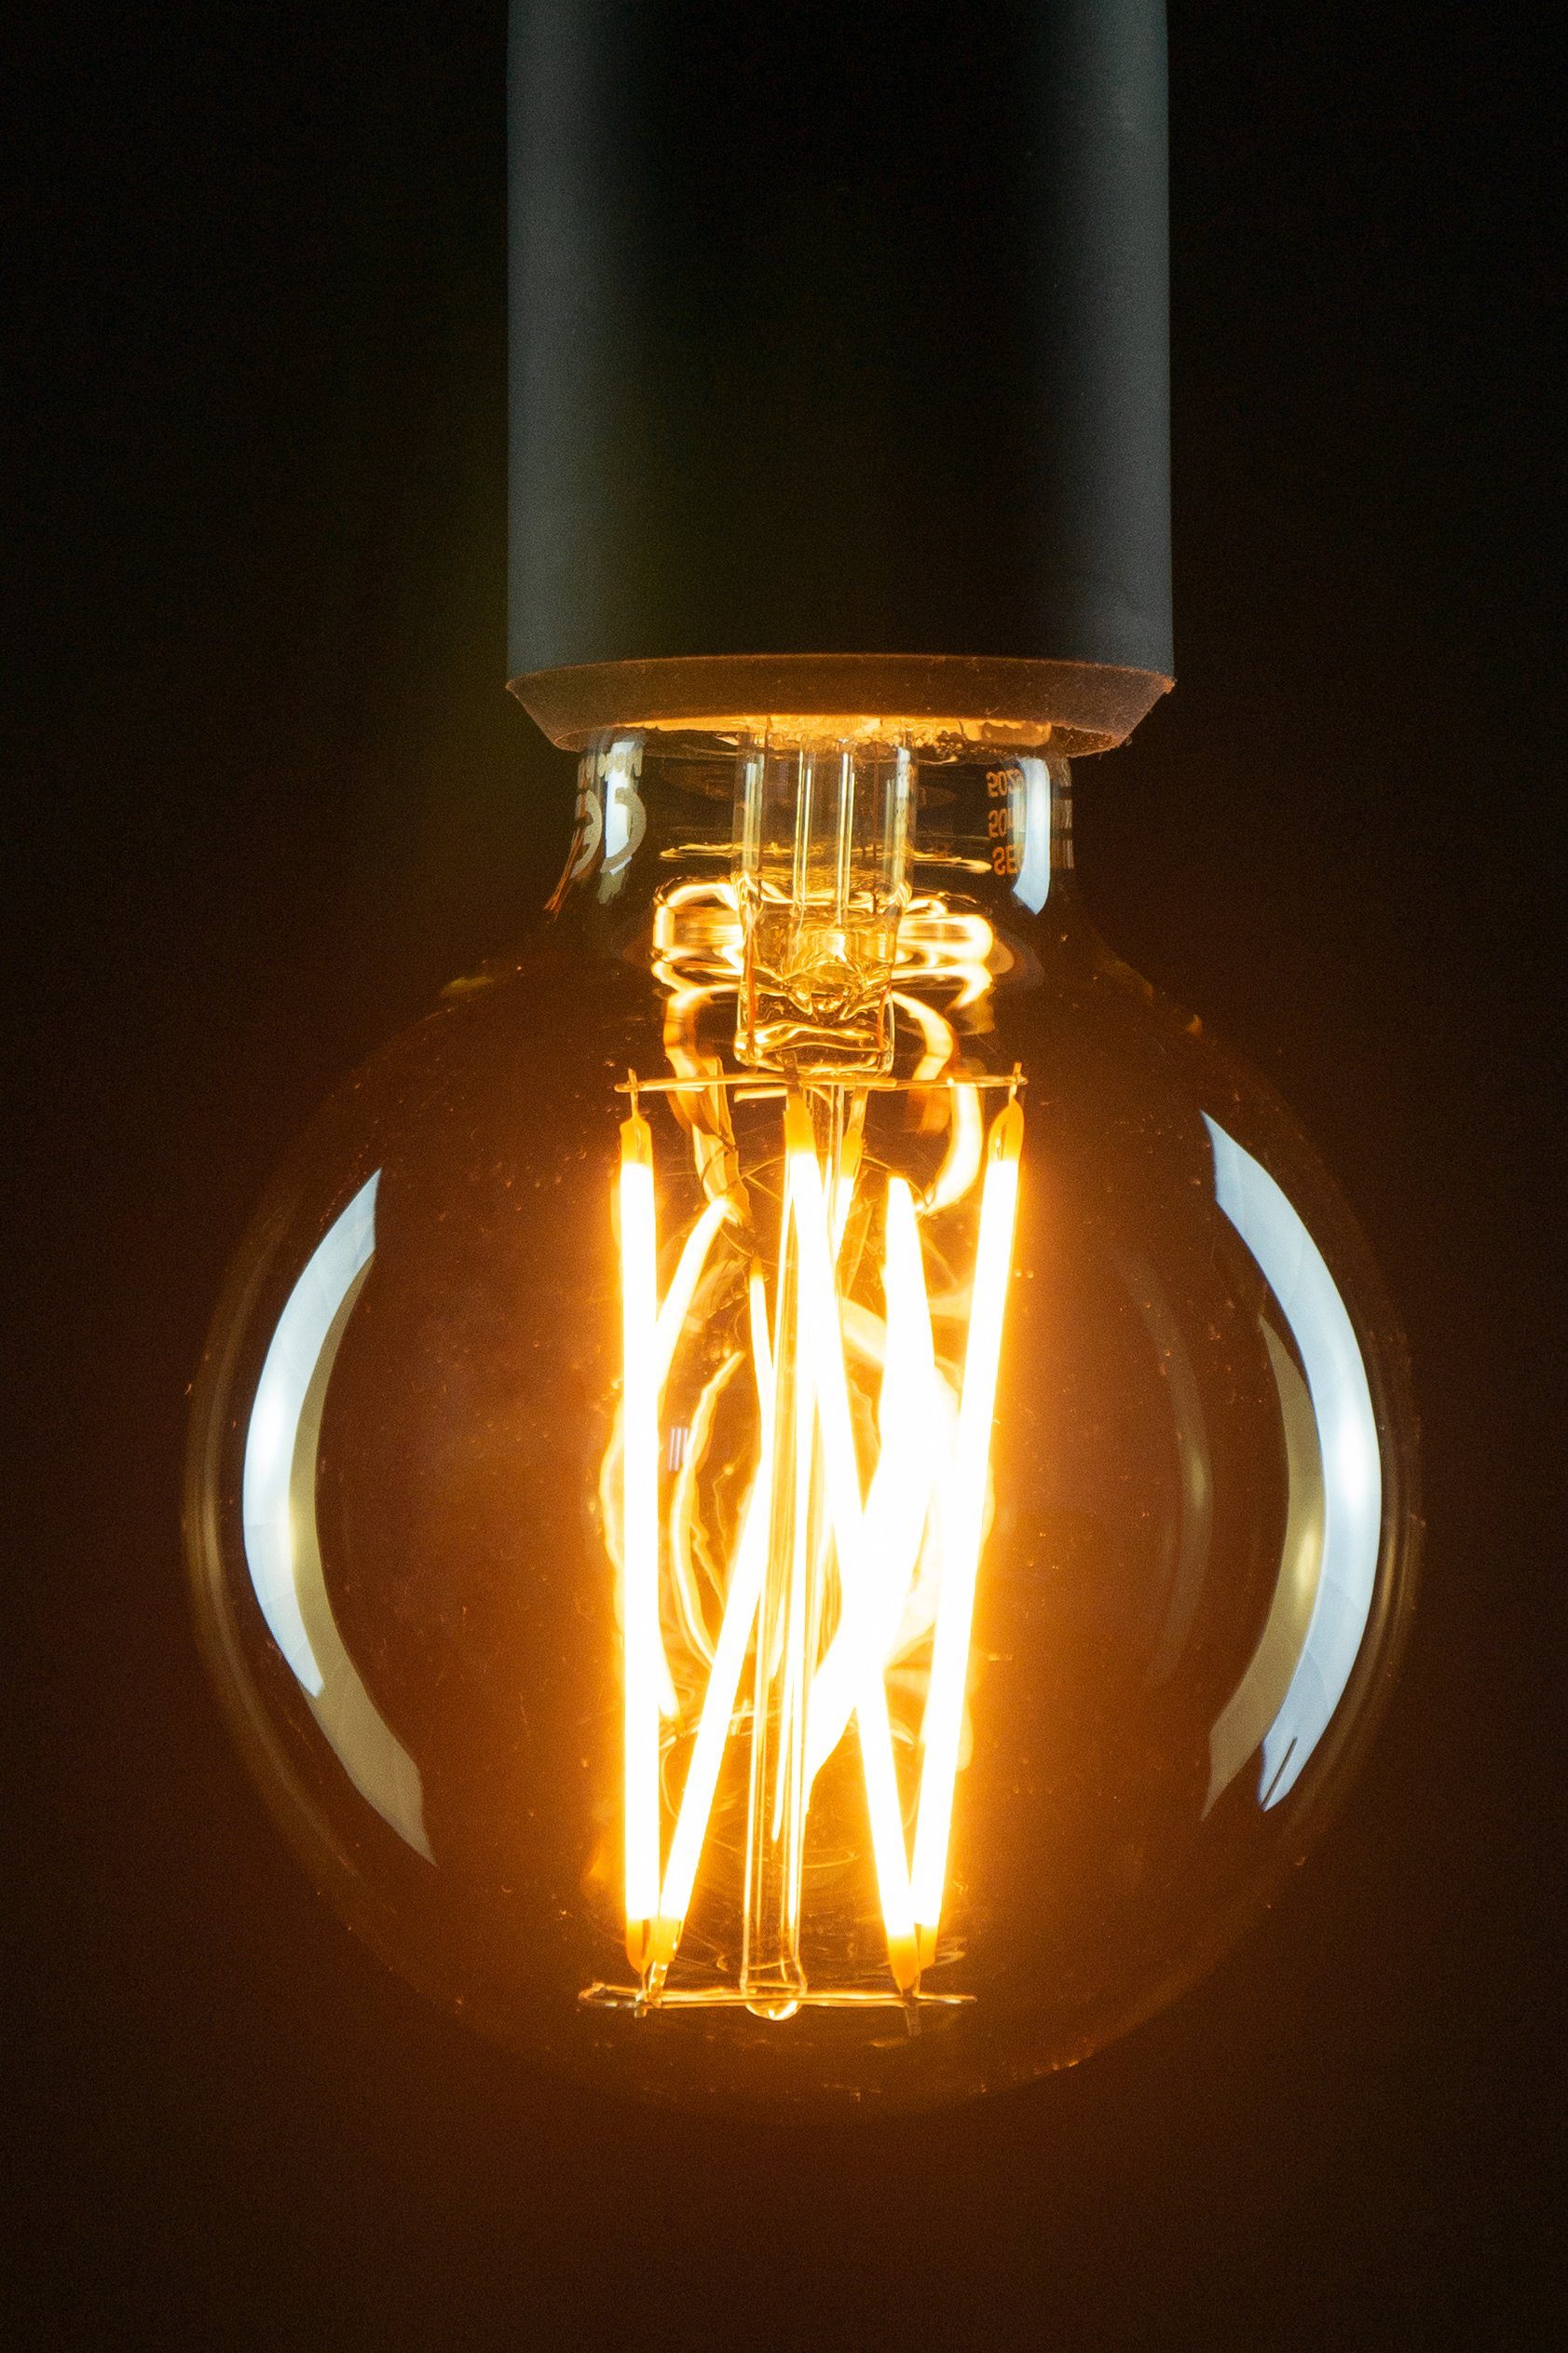 SEGULA LED-Leuchtmittel LED Globe 80 gold 80, gold, E27, Warmweiß, dimmbar, E27, Globe